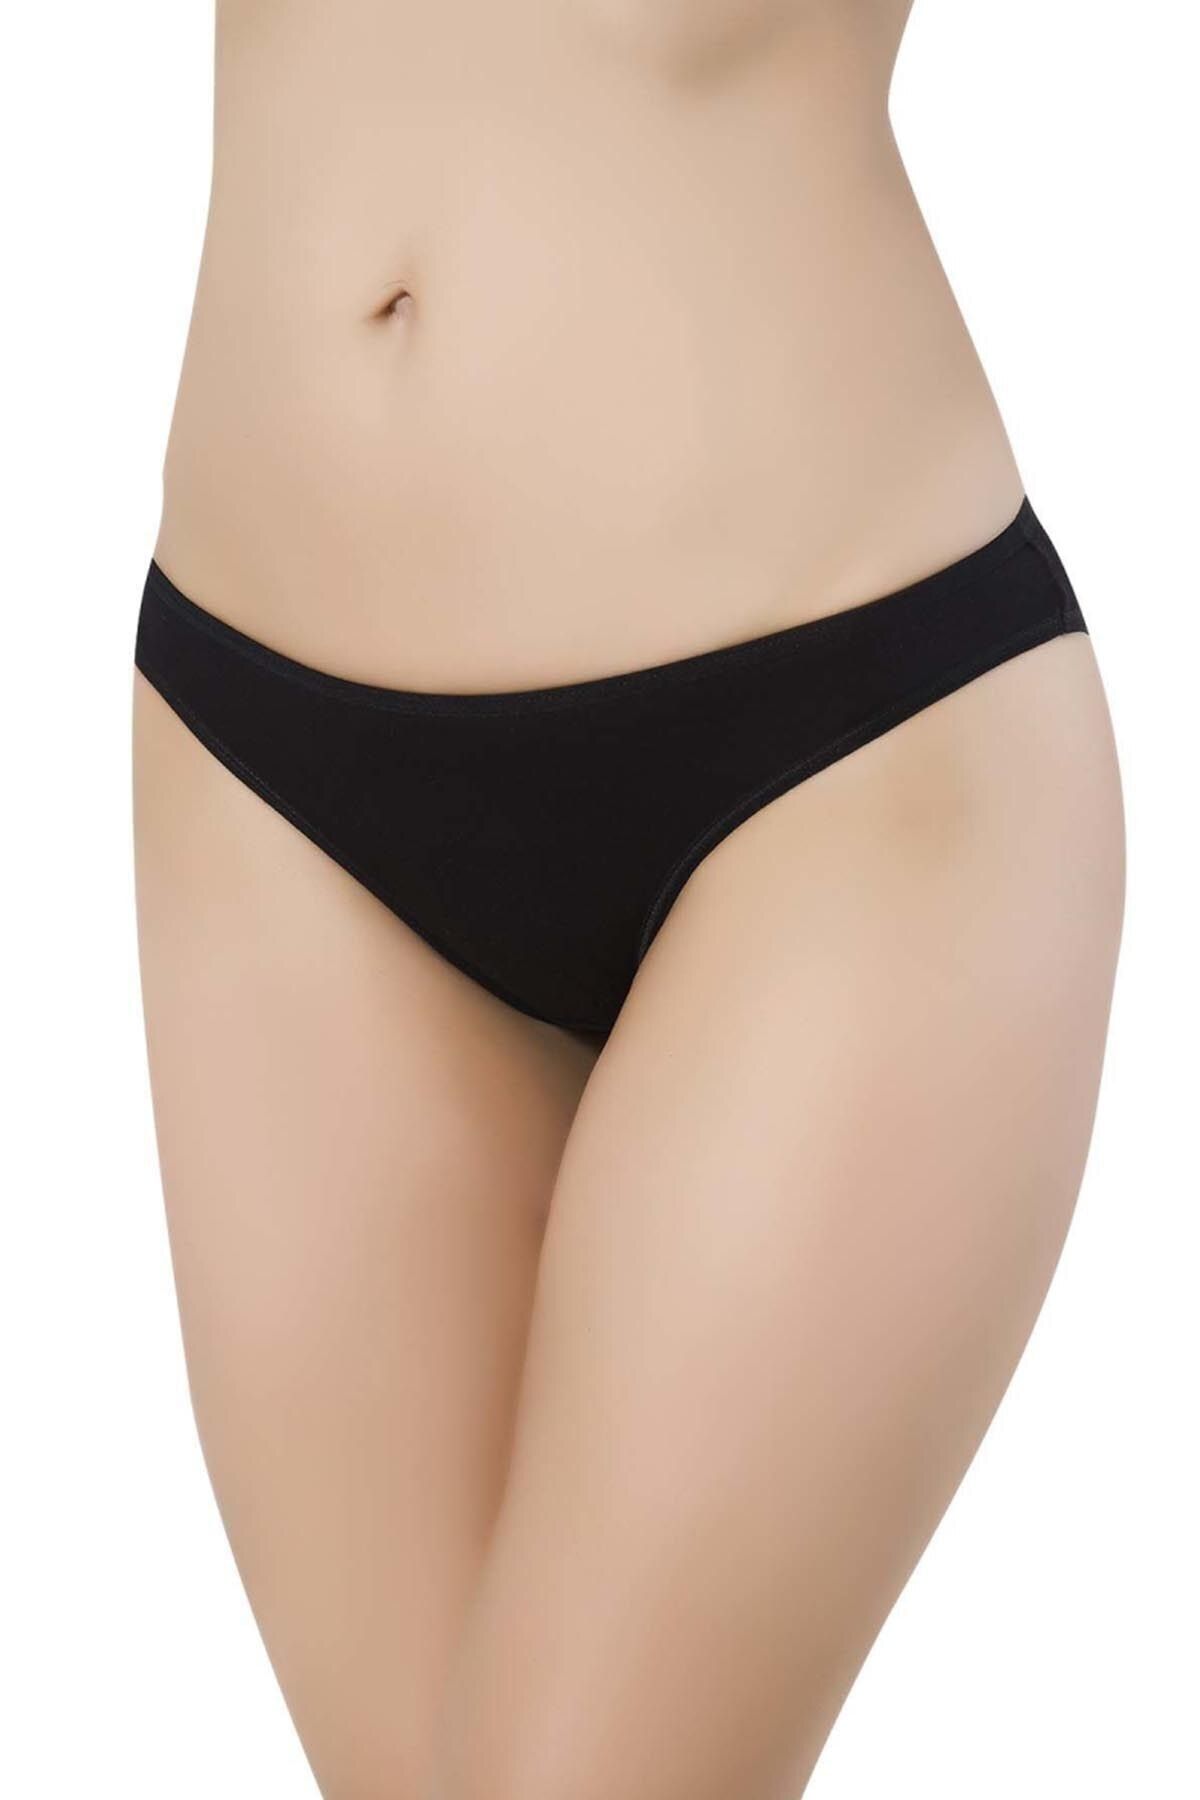 Trendyol Curve Black Lace Detailed Bustier-Panties Underwear Sets  TBBSS23DG00000 - Trendyol